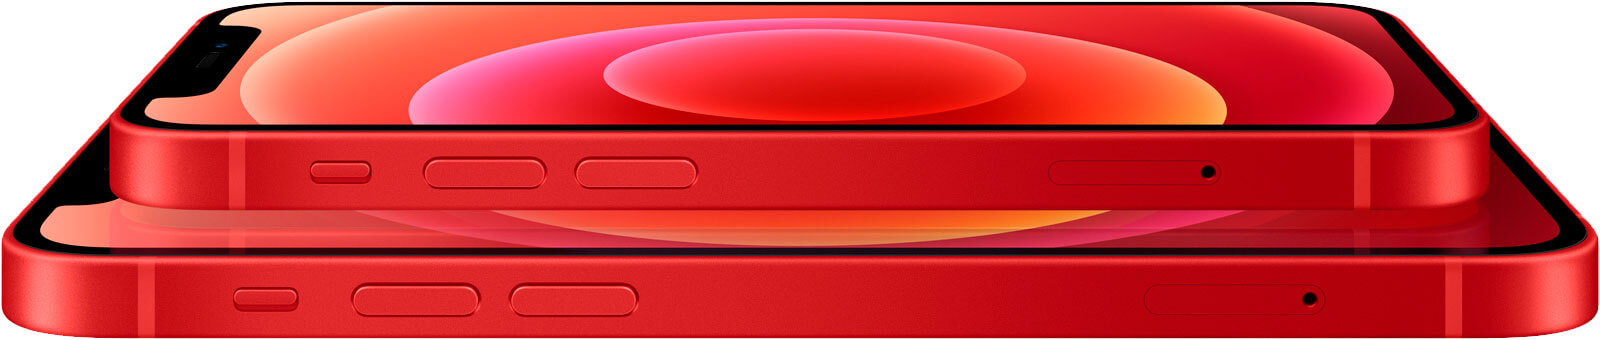 Nuevo iPhone 12 Rojo Barato